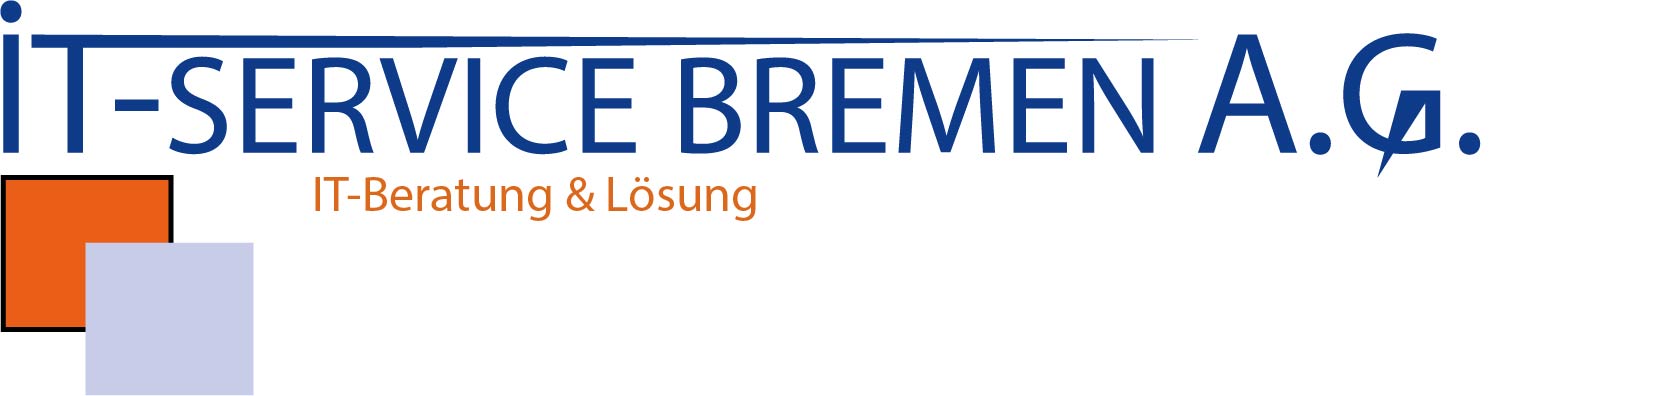 IT-Service-Bremen A.G.